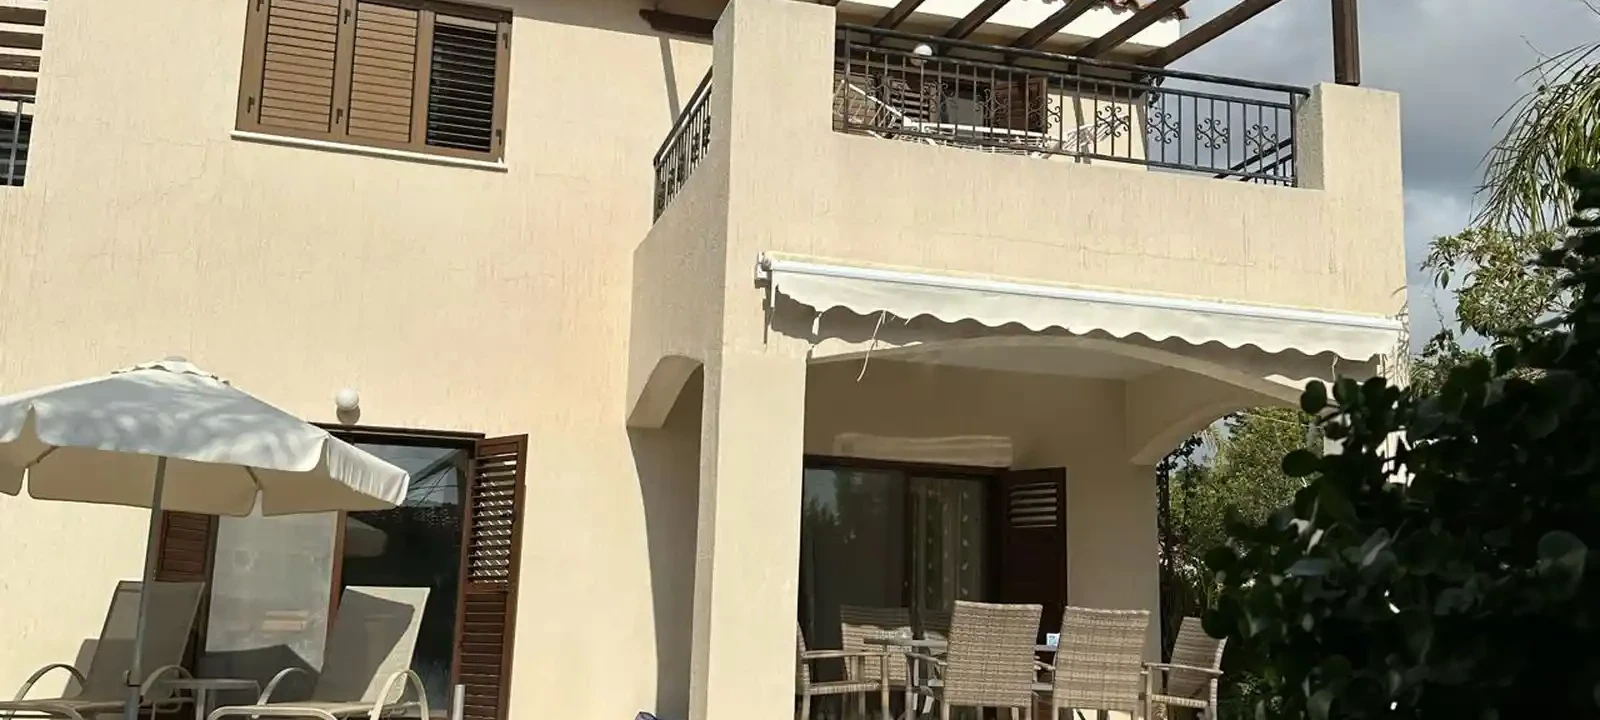 3-bedroom villa fоr sаle €595.000, image 1